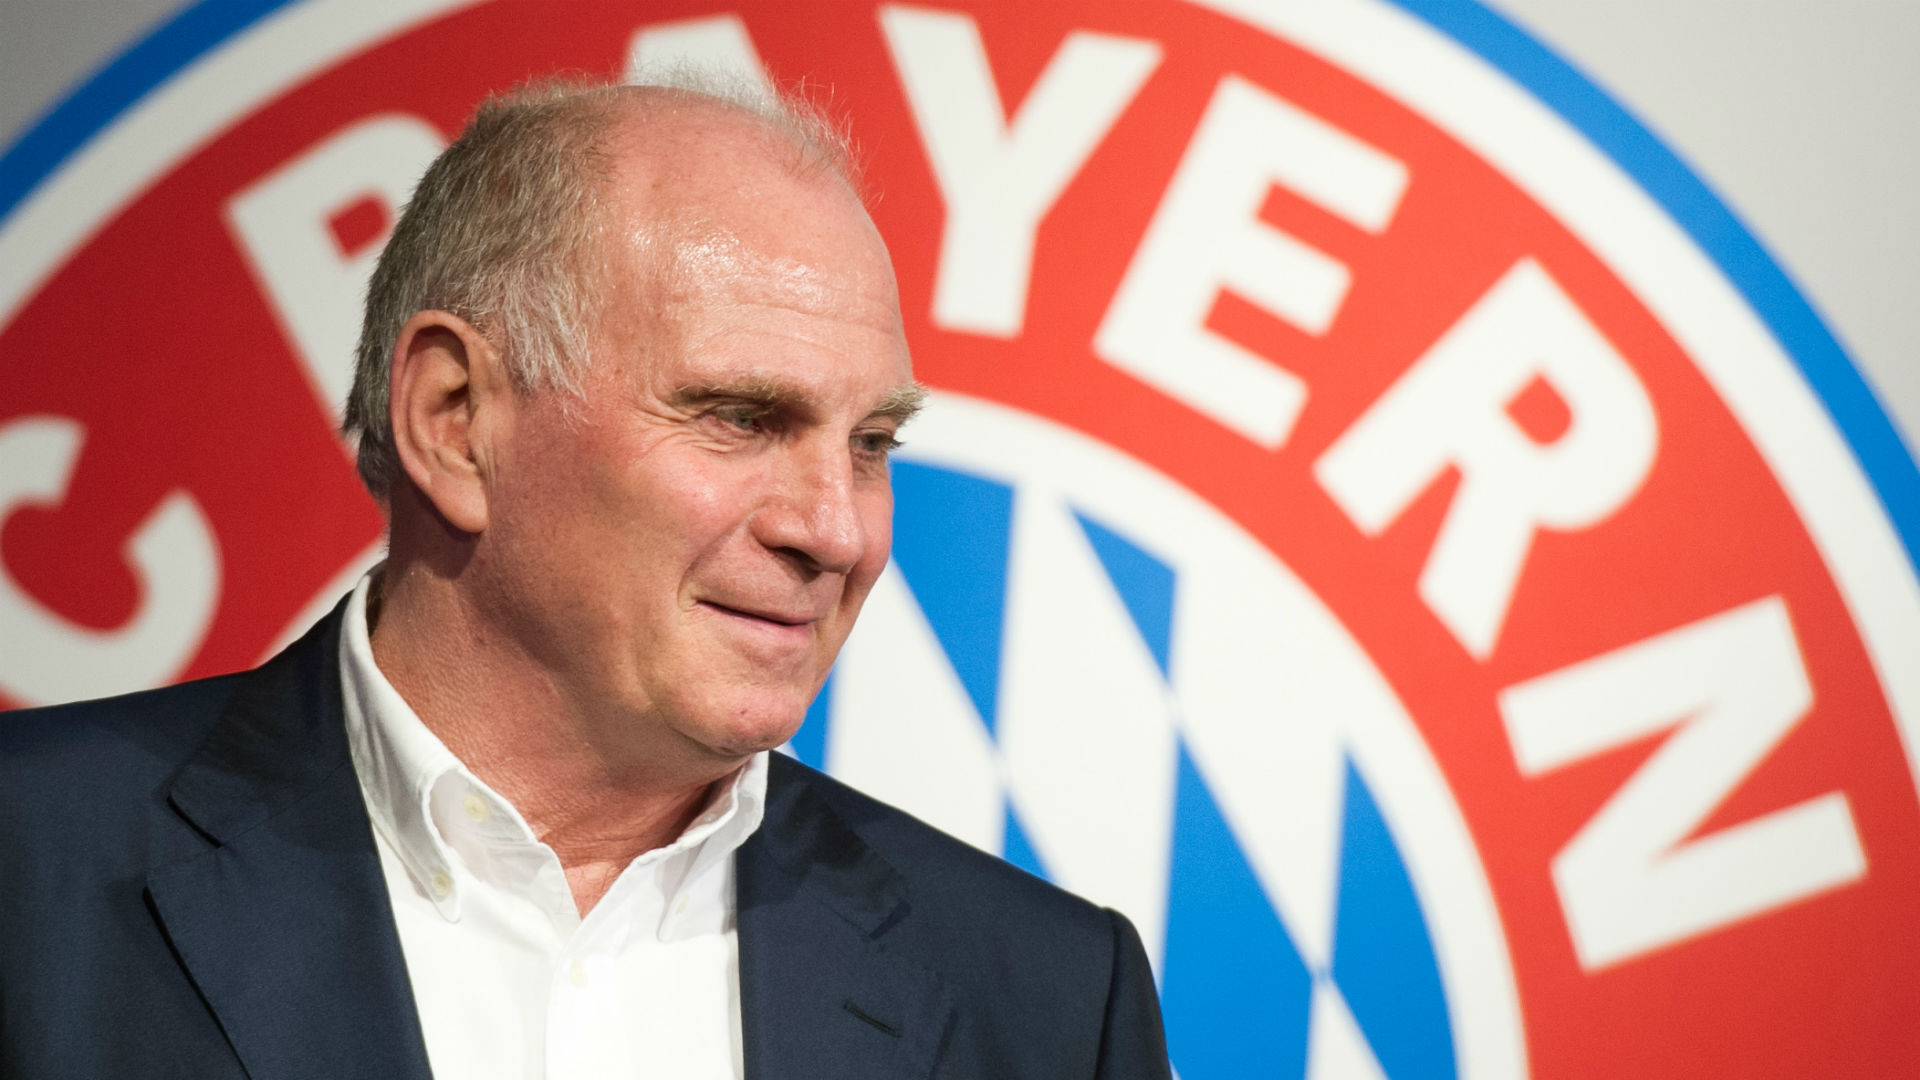 Uli Hoeness Believes In Bayern Munich's New Spirit